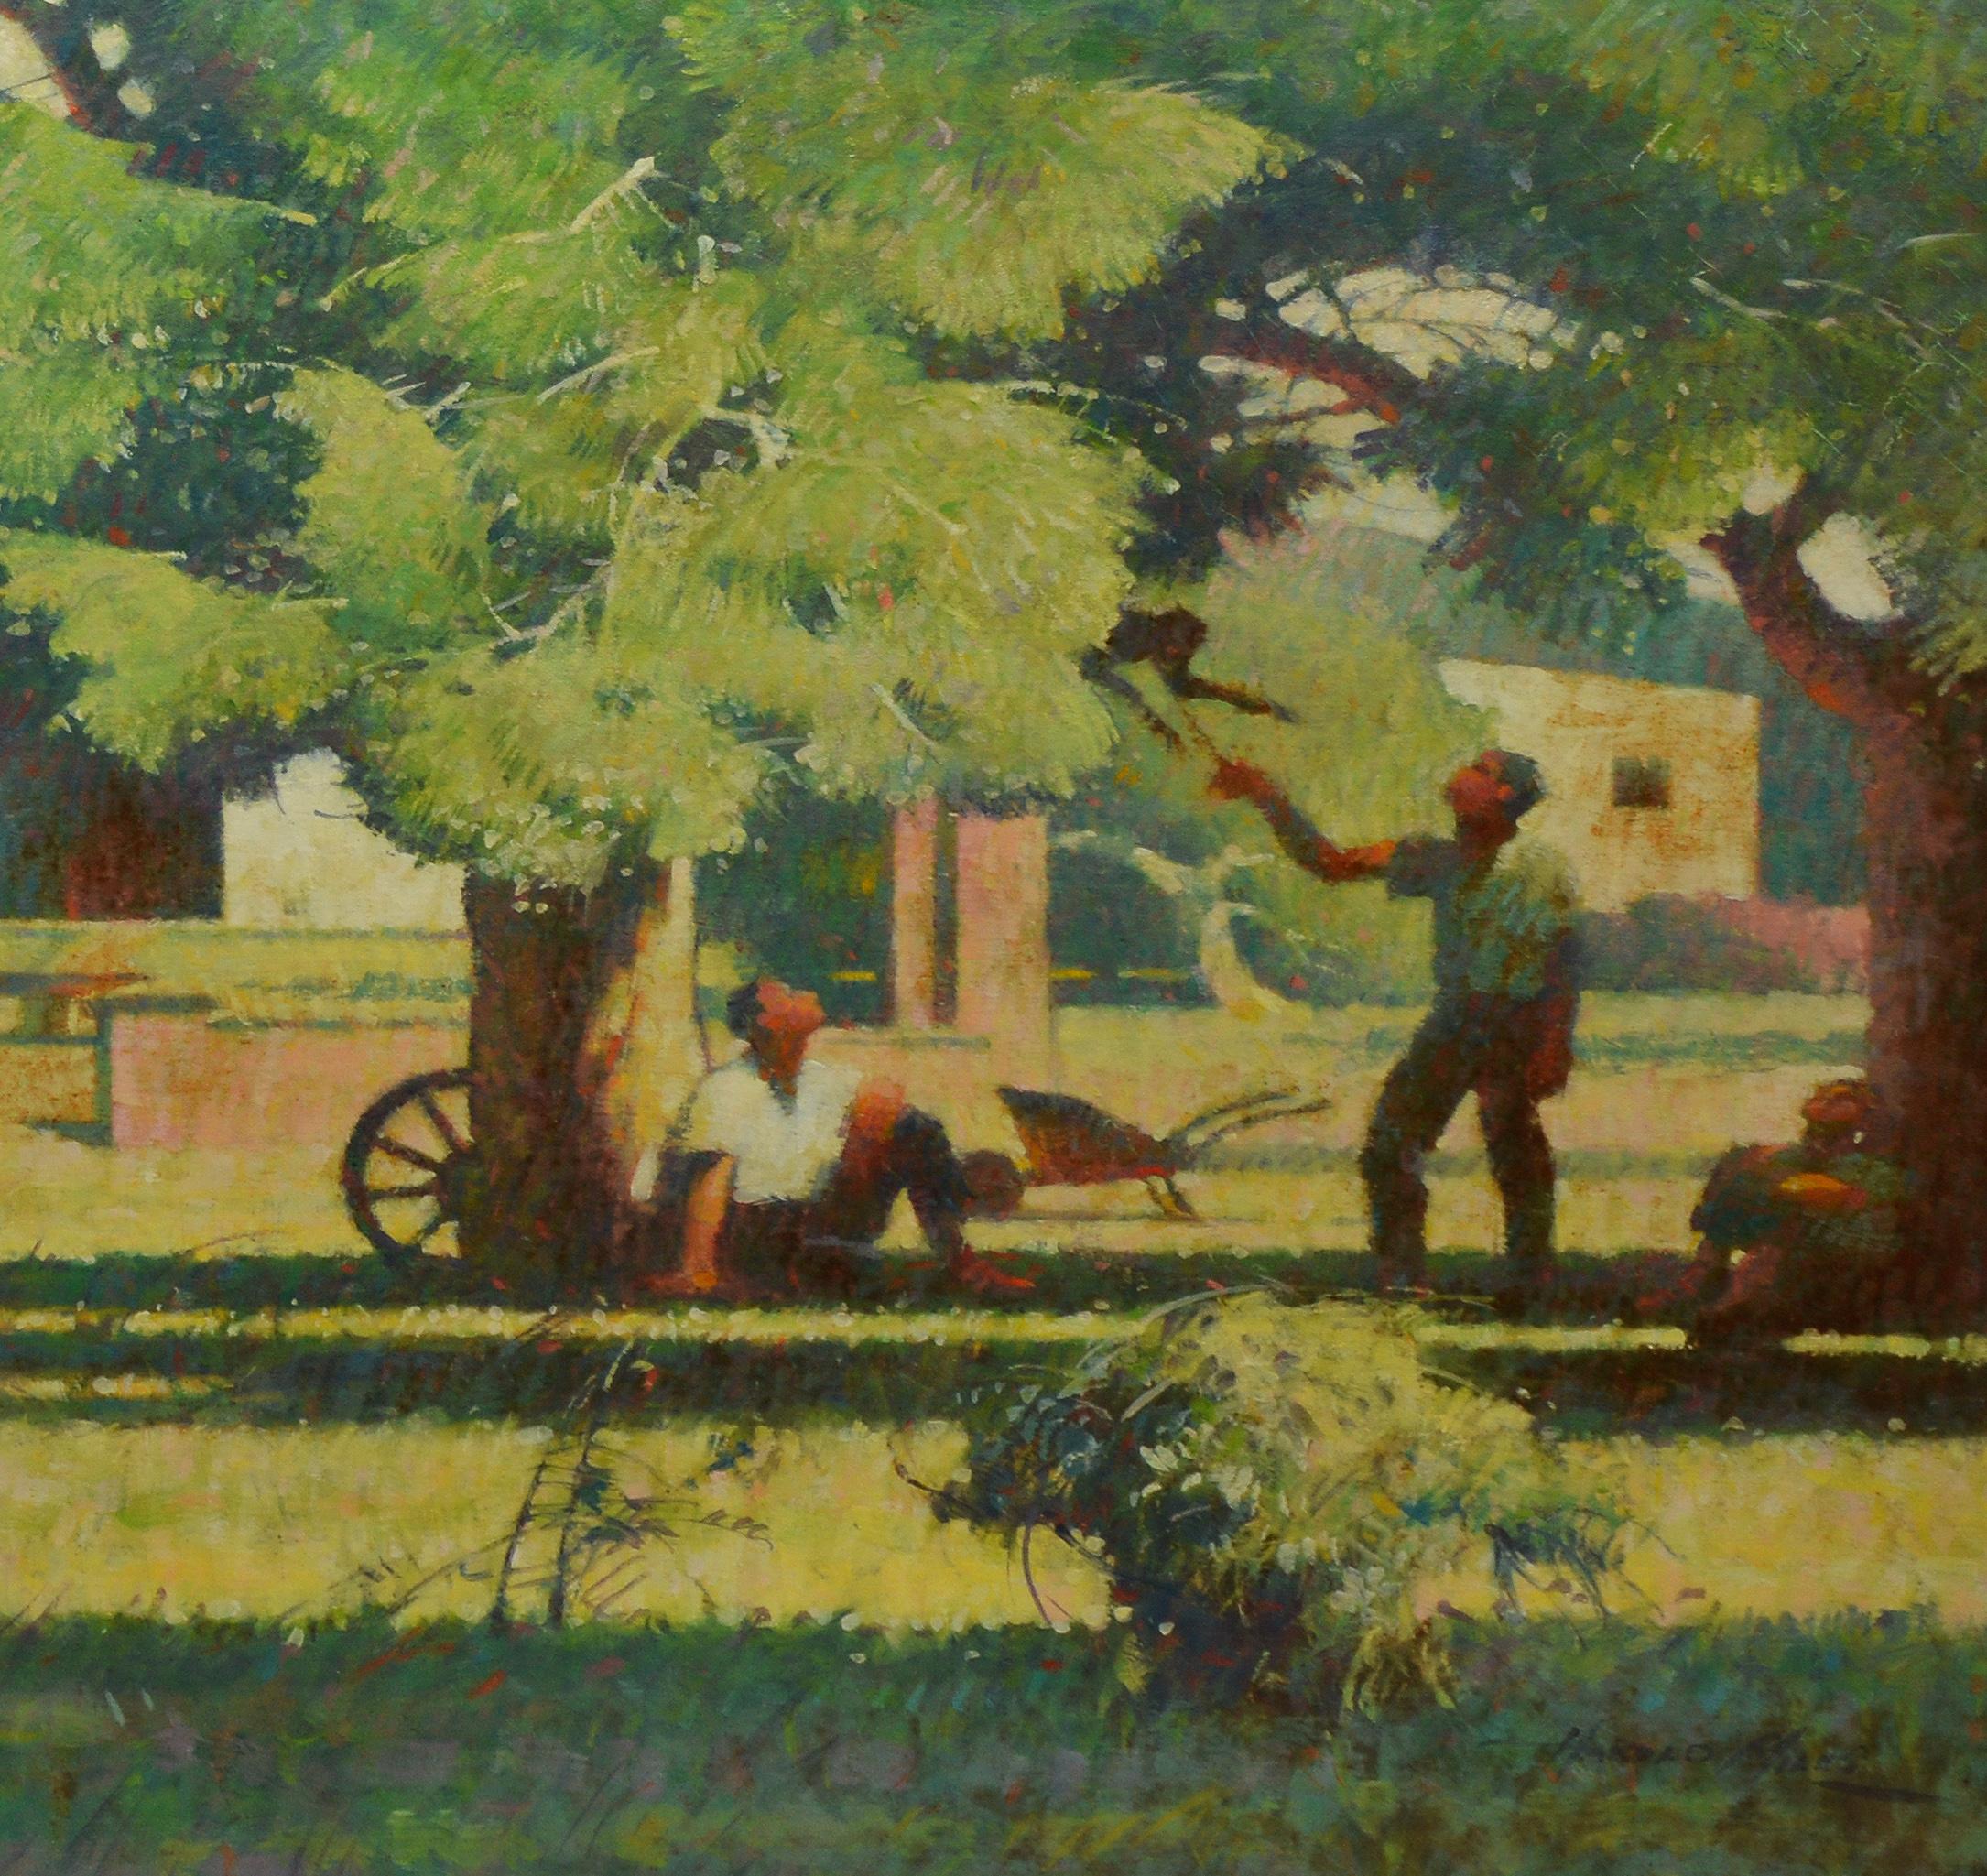 Antique Modernist California Farm Landscape Oil Painting by Harold Miles 1